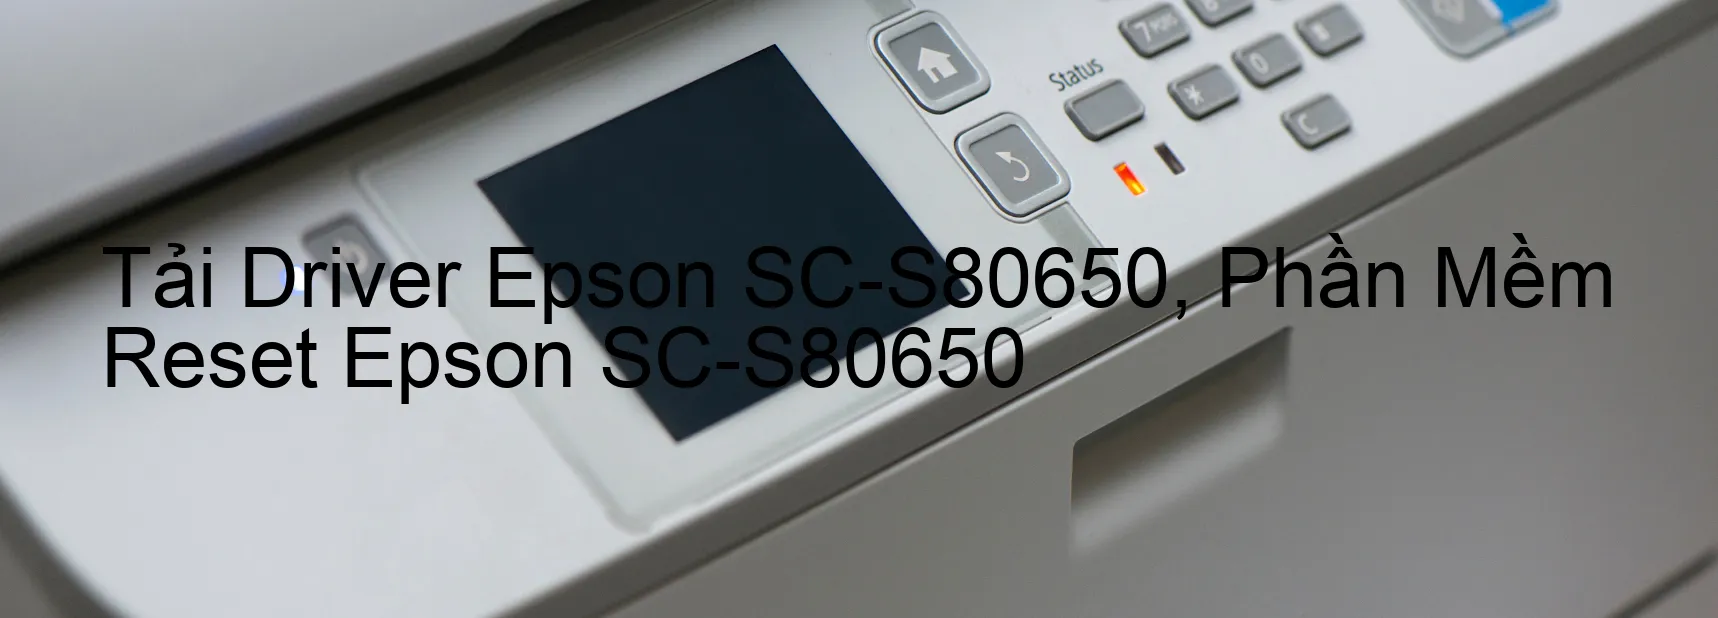 Driver Epson SC-S80650, Phần Mềm Reset Epson SC-S80650